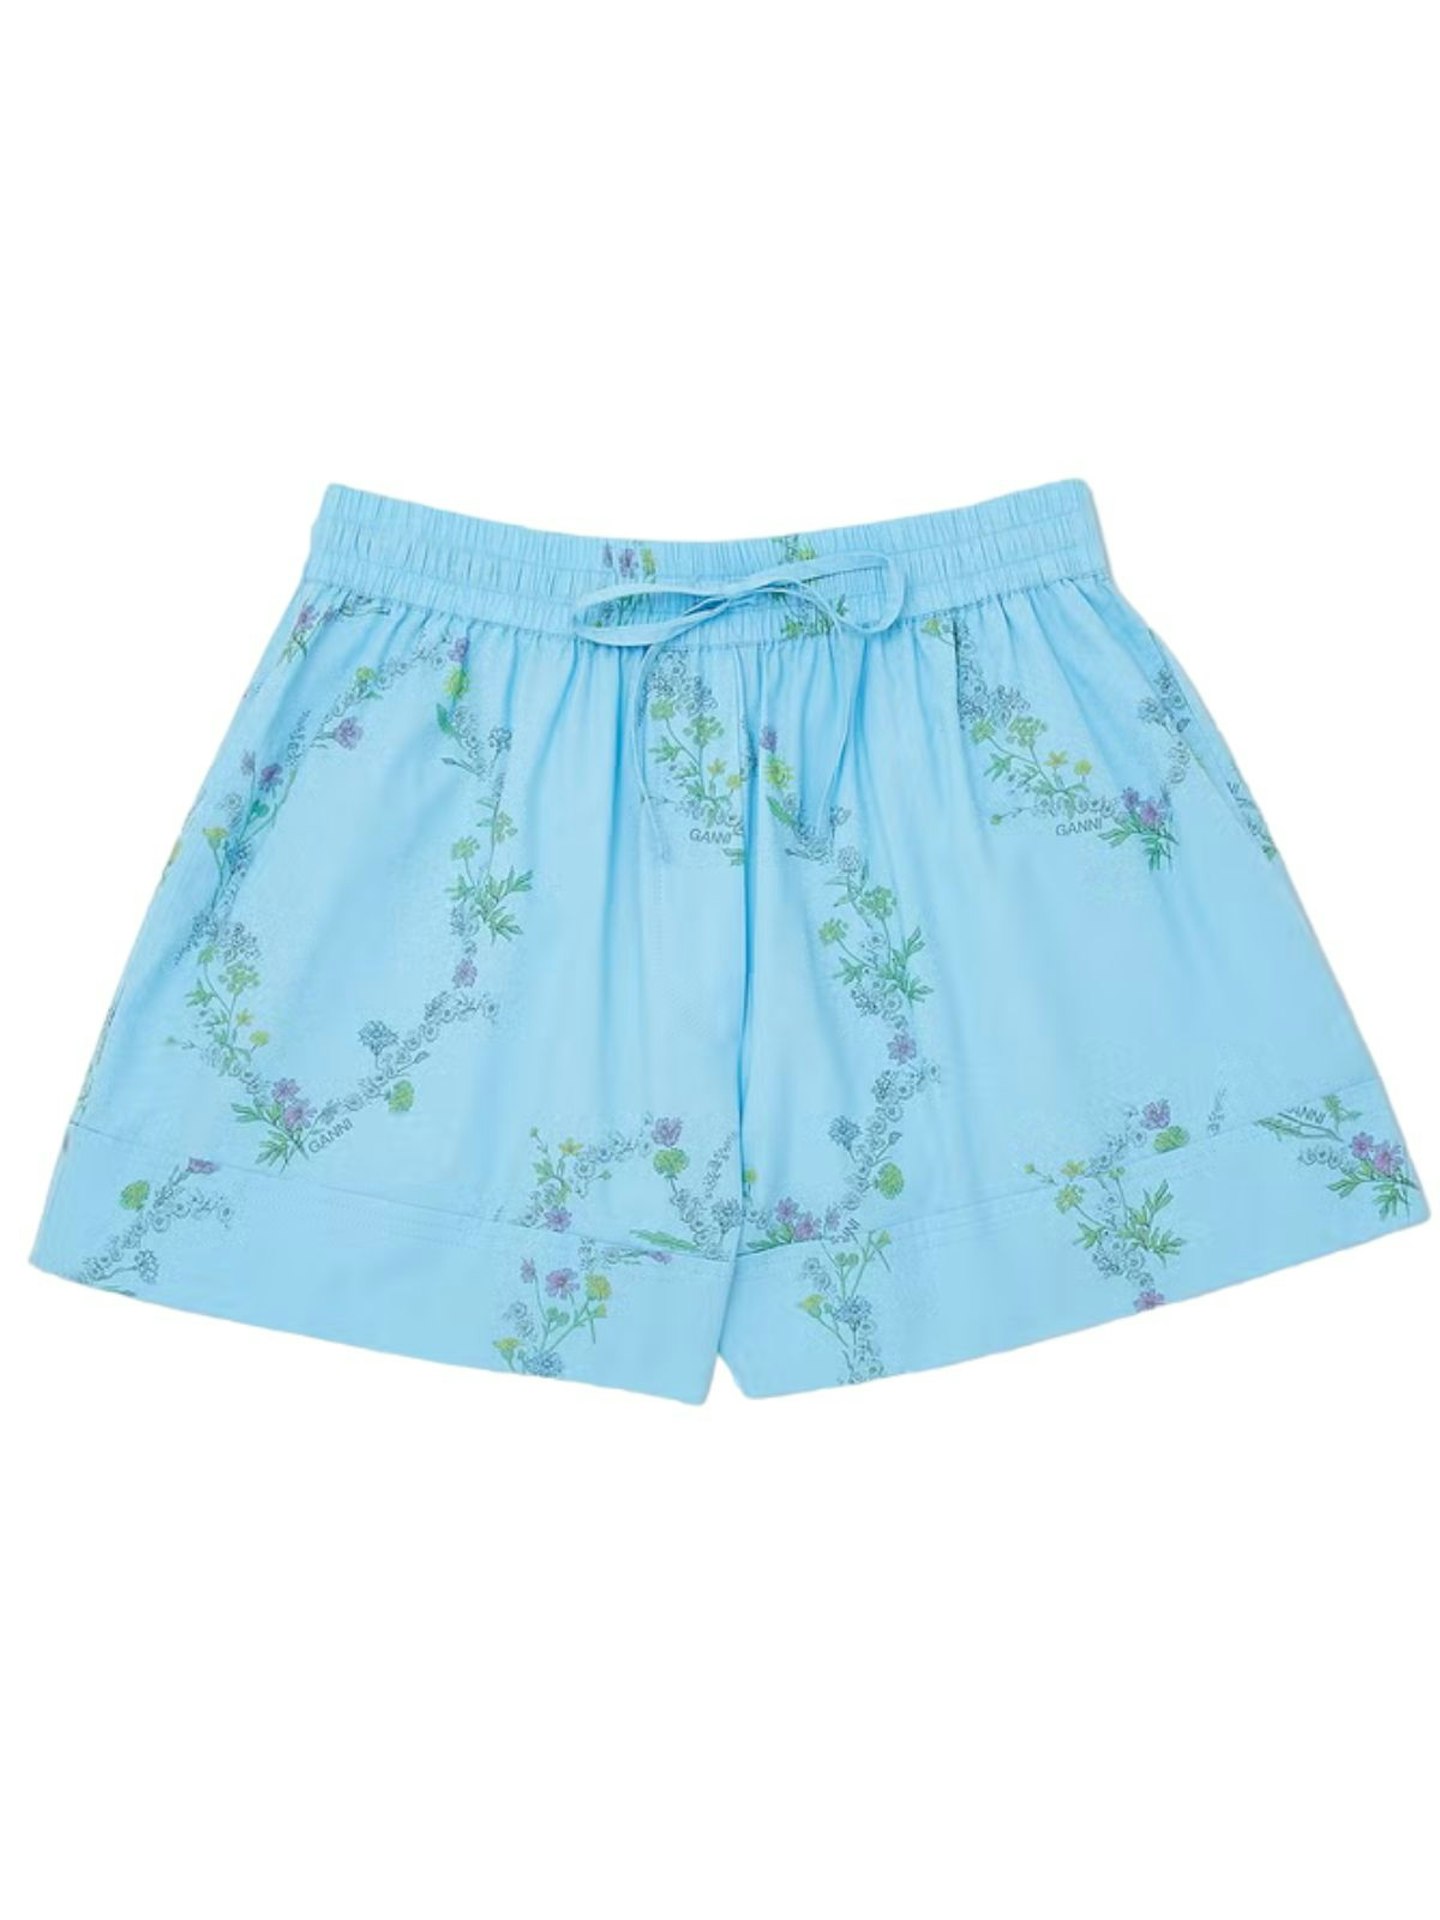 Ganni x Coggles Floral-Print Organic Cotton Shorts